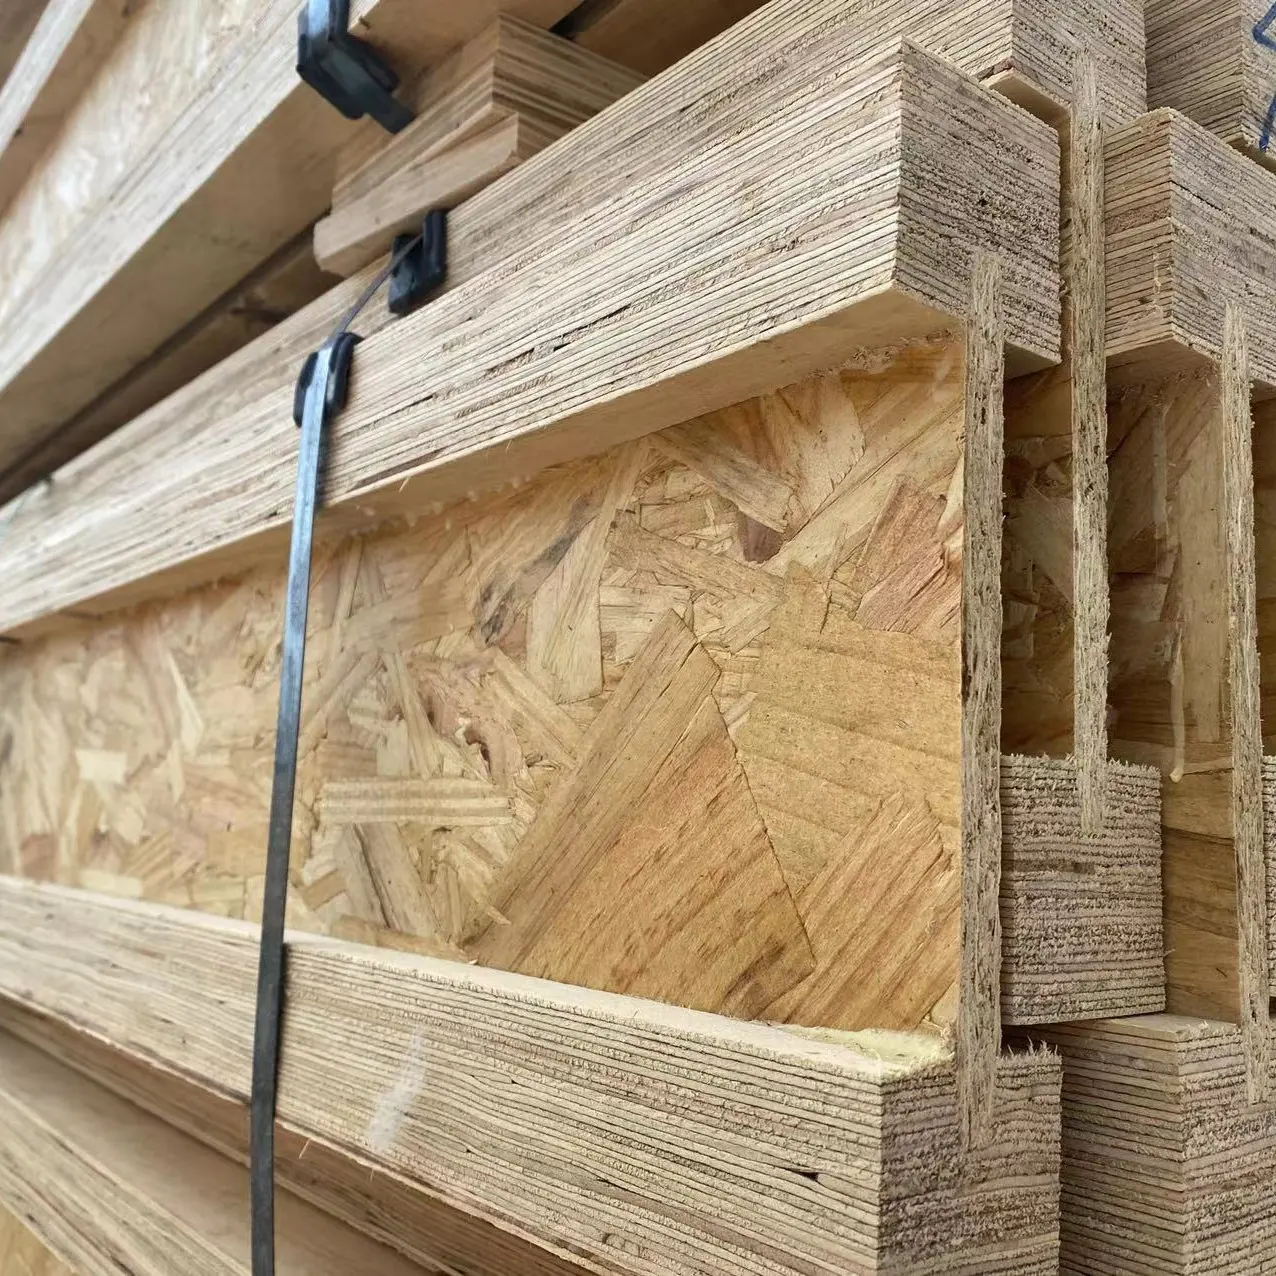 Australia Standards Wood Lvl Lumber Beam For I Joist And Construction